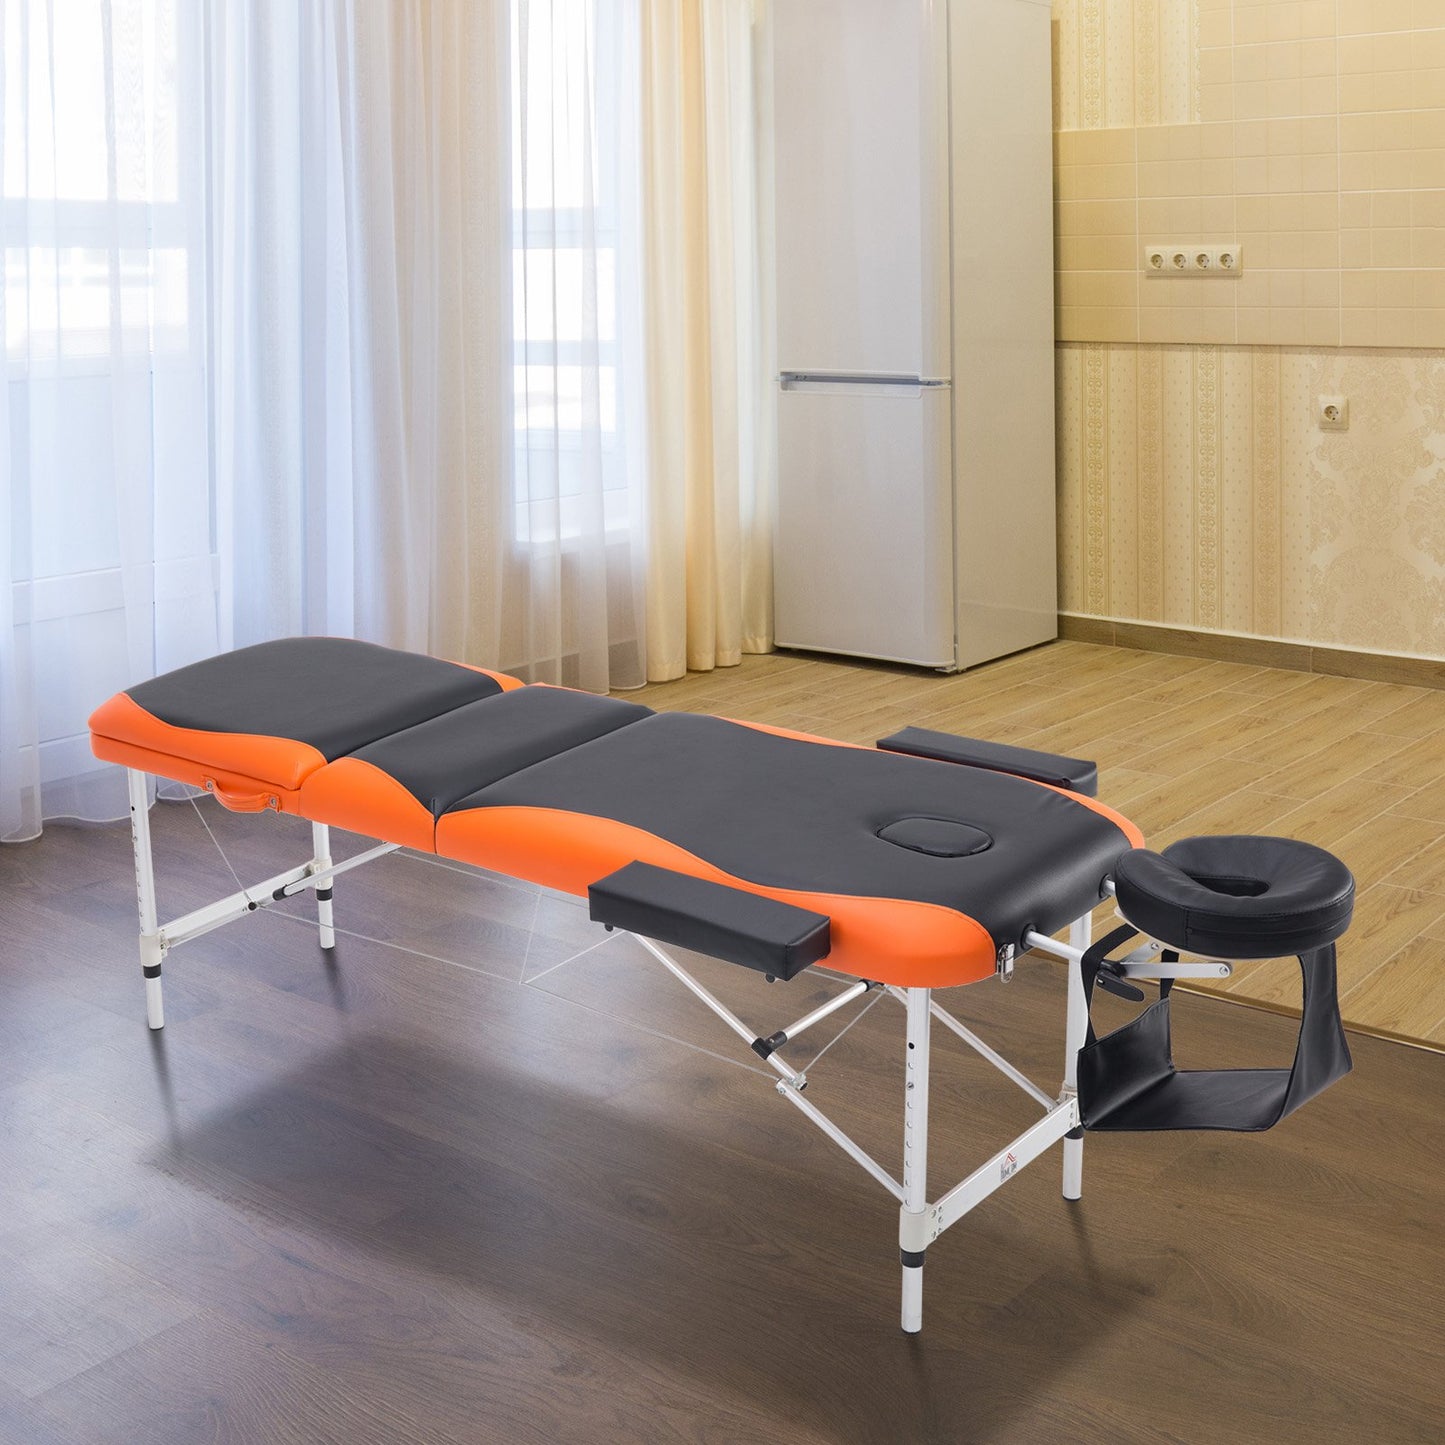 HOMCOM Professional Portable Massage Table W/Headrest-Black/Orange